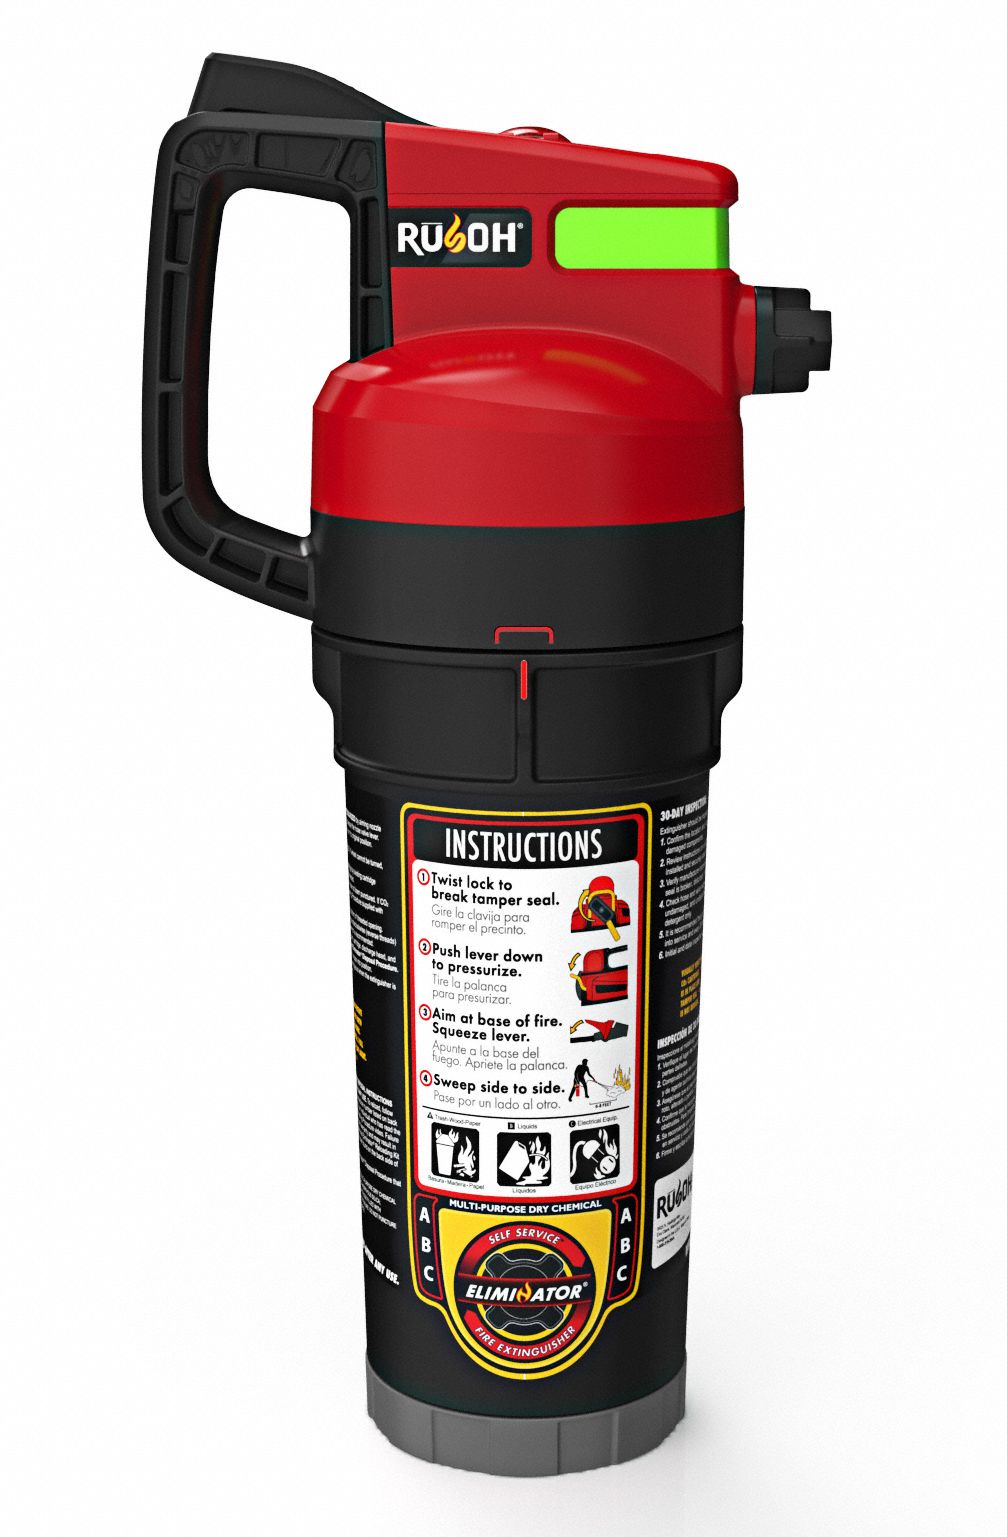 Fire Extinguisher: Monoammonium Phosphate, ABC, 2.5 lb Capacity, 1A:10B:C, Pressure Transfer